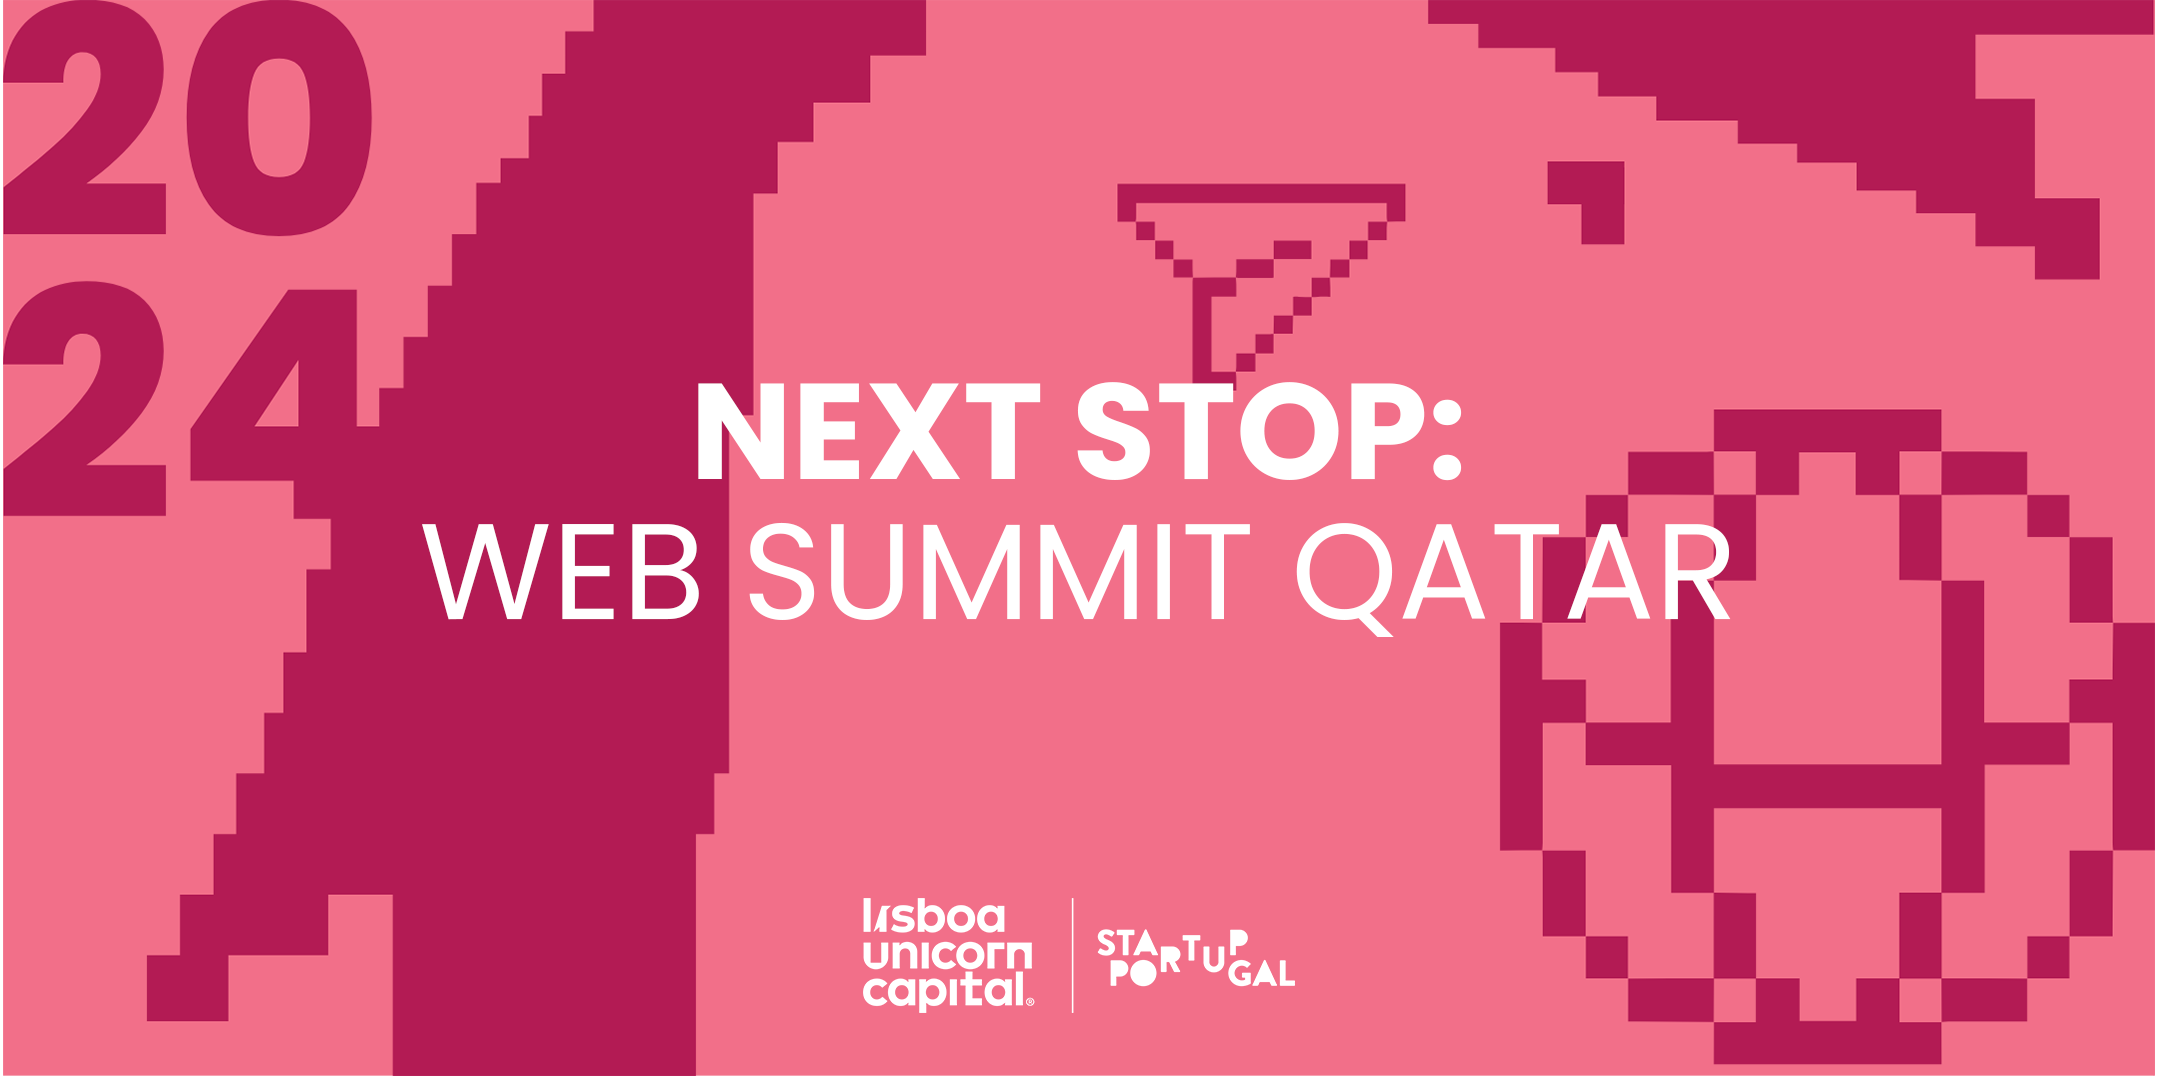 Next stop: Web Summit Qatar!